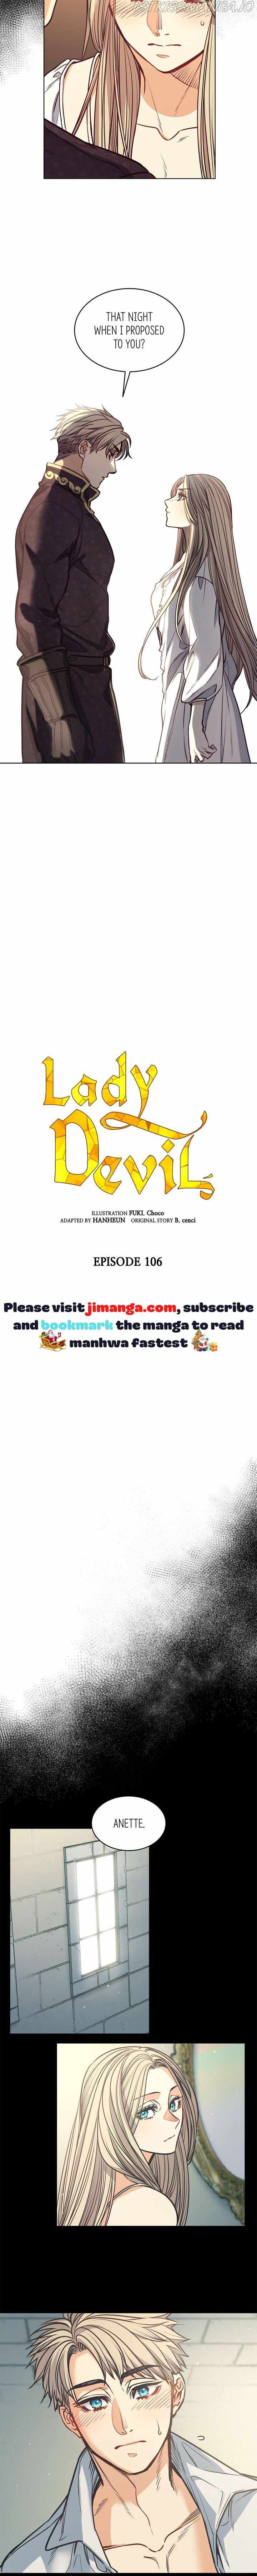 The Devil Chapter 106-eng-li - Page 2